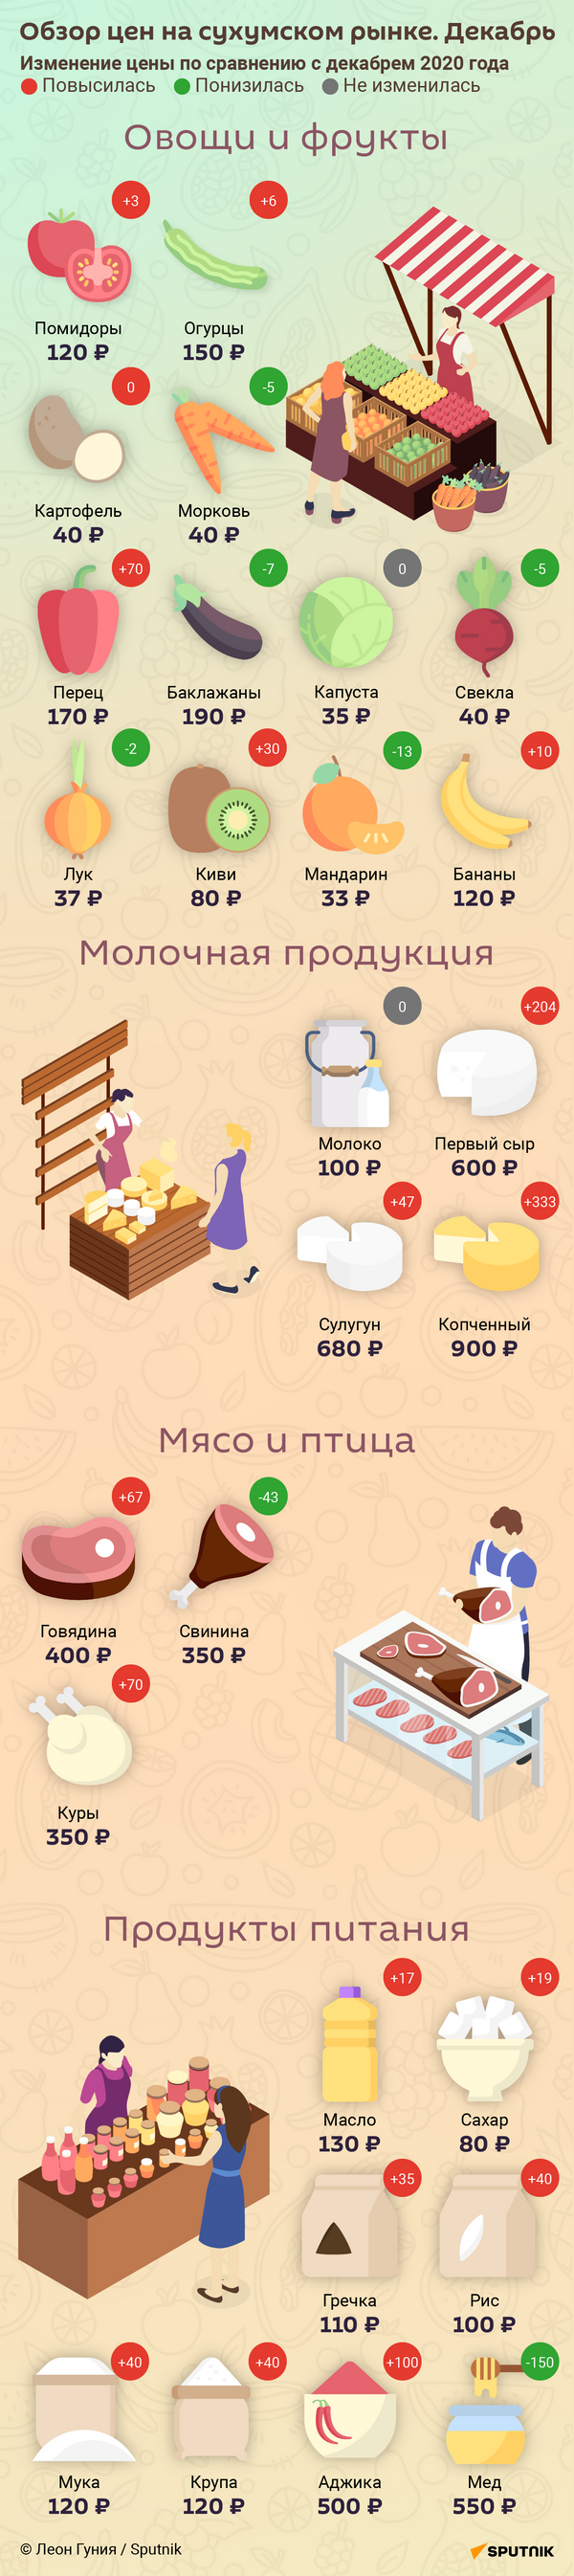 Обзор цен на рынке за декабрь месяц  - Sputnik Абхазия